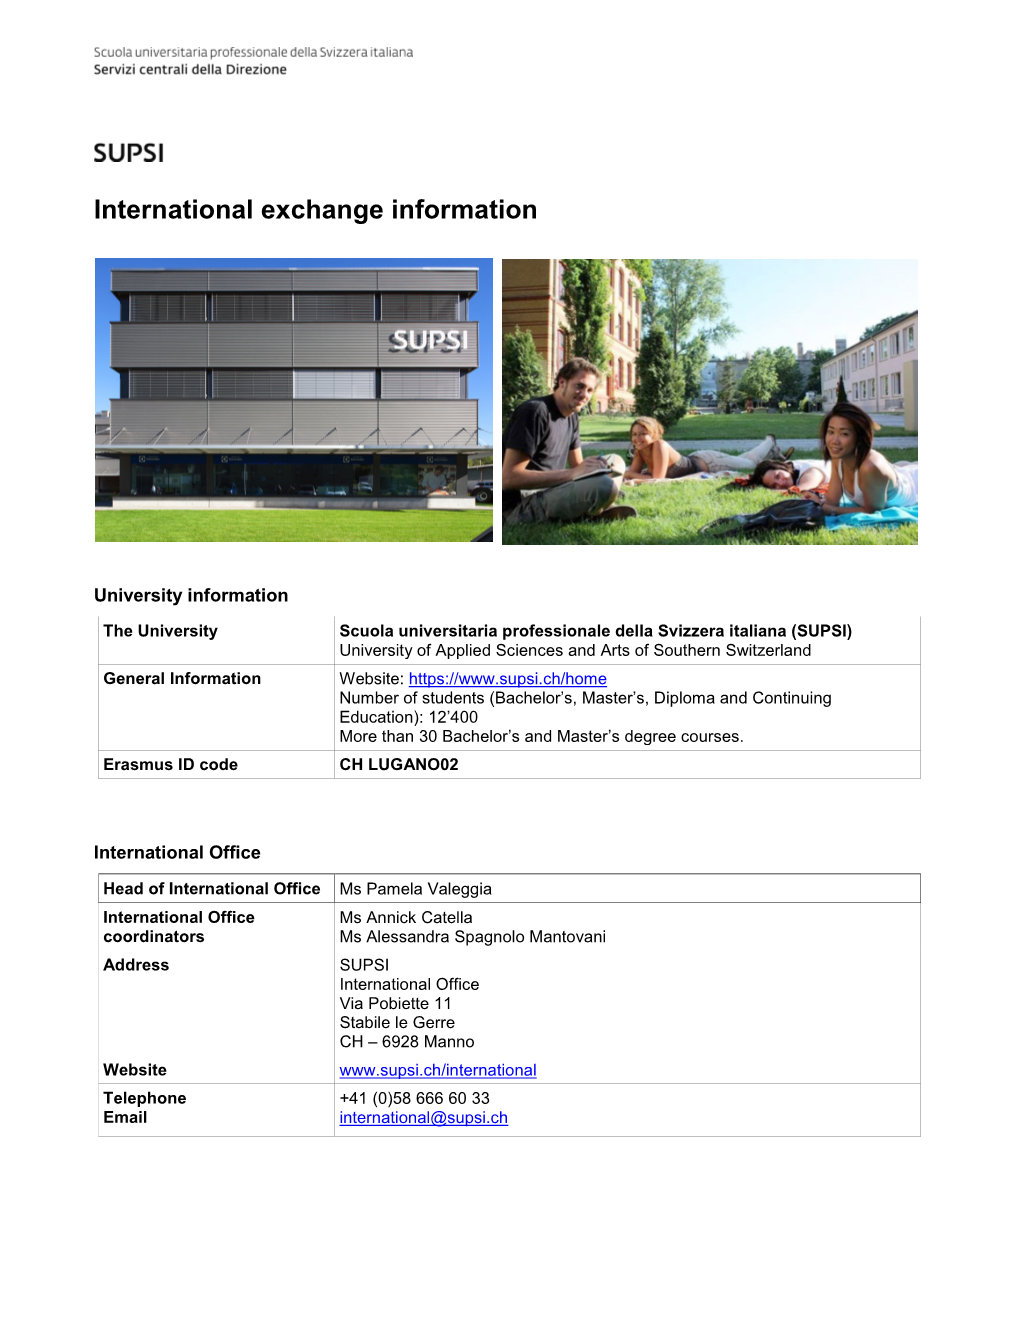 International Exchange Information